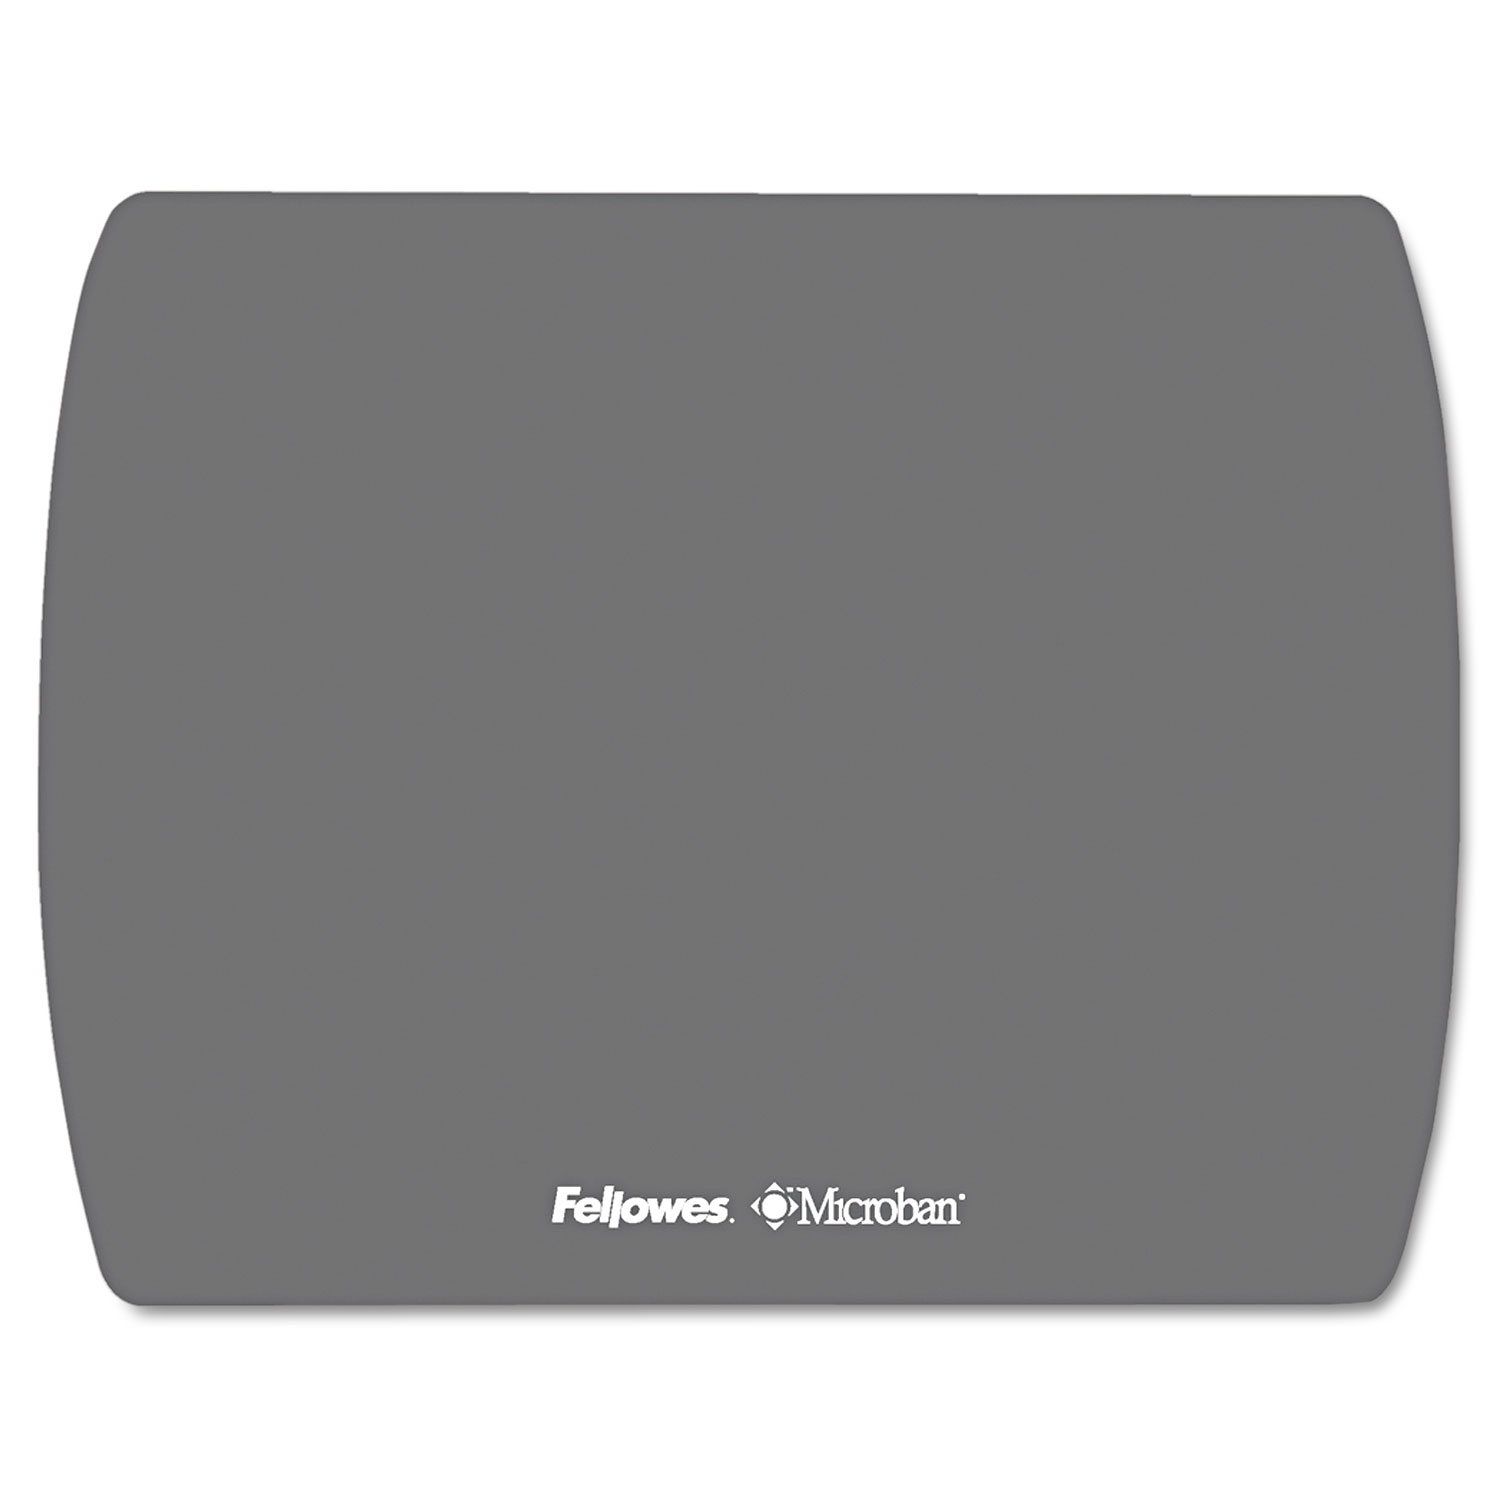  Fellowes 5908201 Microban Ultra Thin Mouse Pad, Graphite (FEL5908201) 